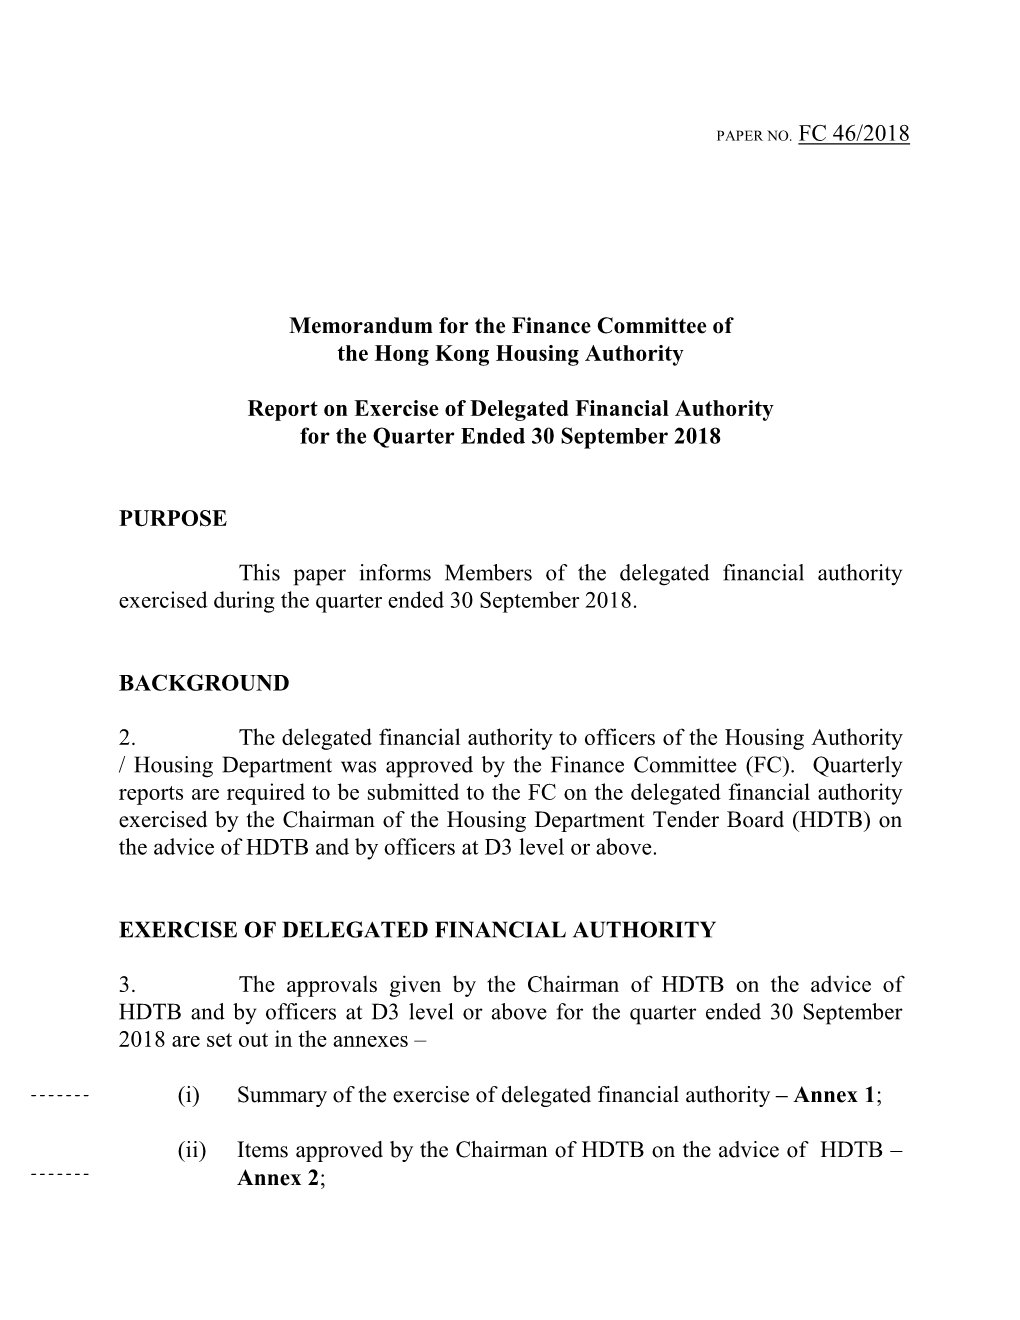 Memorandum for the Finance Committee of the Hong Kong Housing Authority